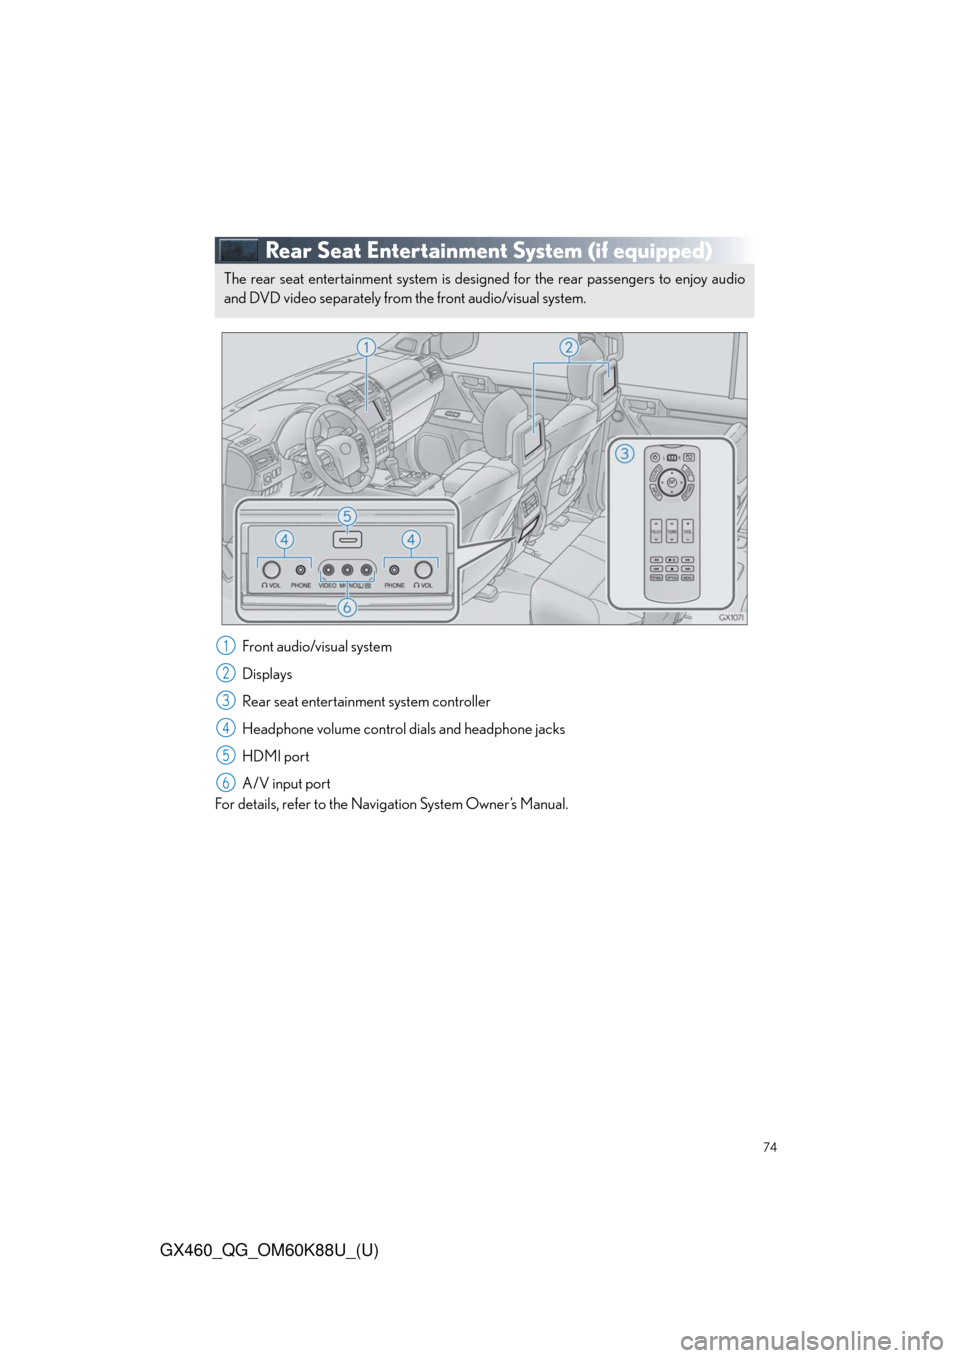 Lexus GX460 2014  Key information / LEXUS 2014 GX460 QUICK GUIDE OWNERS MANUAL (OM60K88U) 74
GX460_QG_OM60K88U_(U)
Rear Seat Entertainment System (if equipped)
Front audio/visual system
Displays
Rear seat entertainment system controller
Headphone volume control dials and headphone jacks
HD